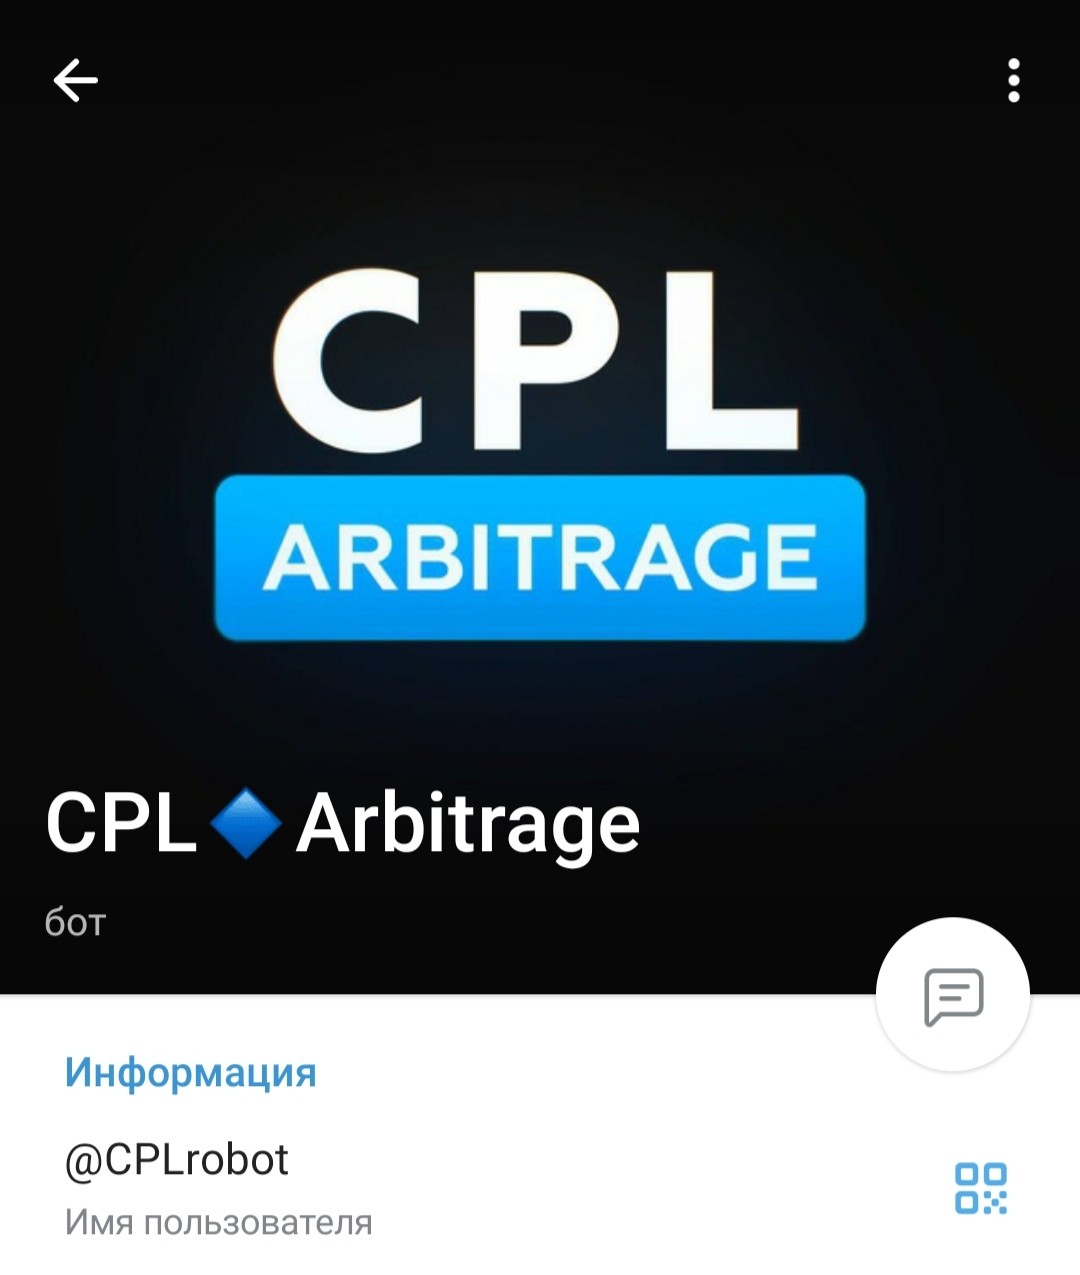 CPL Arbitrage телеграм бот